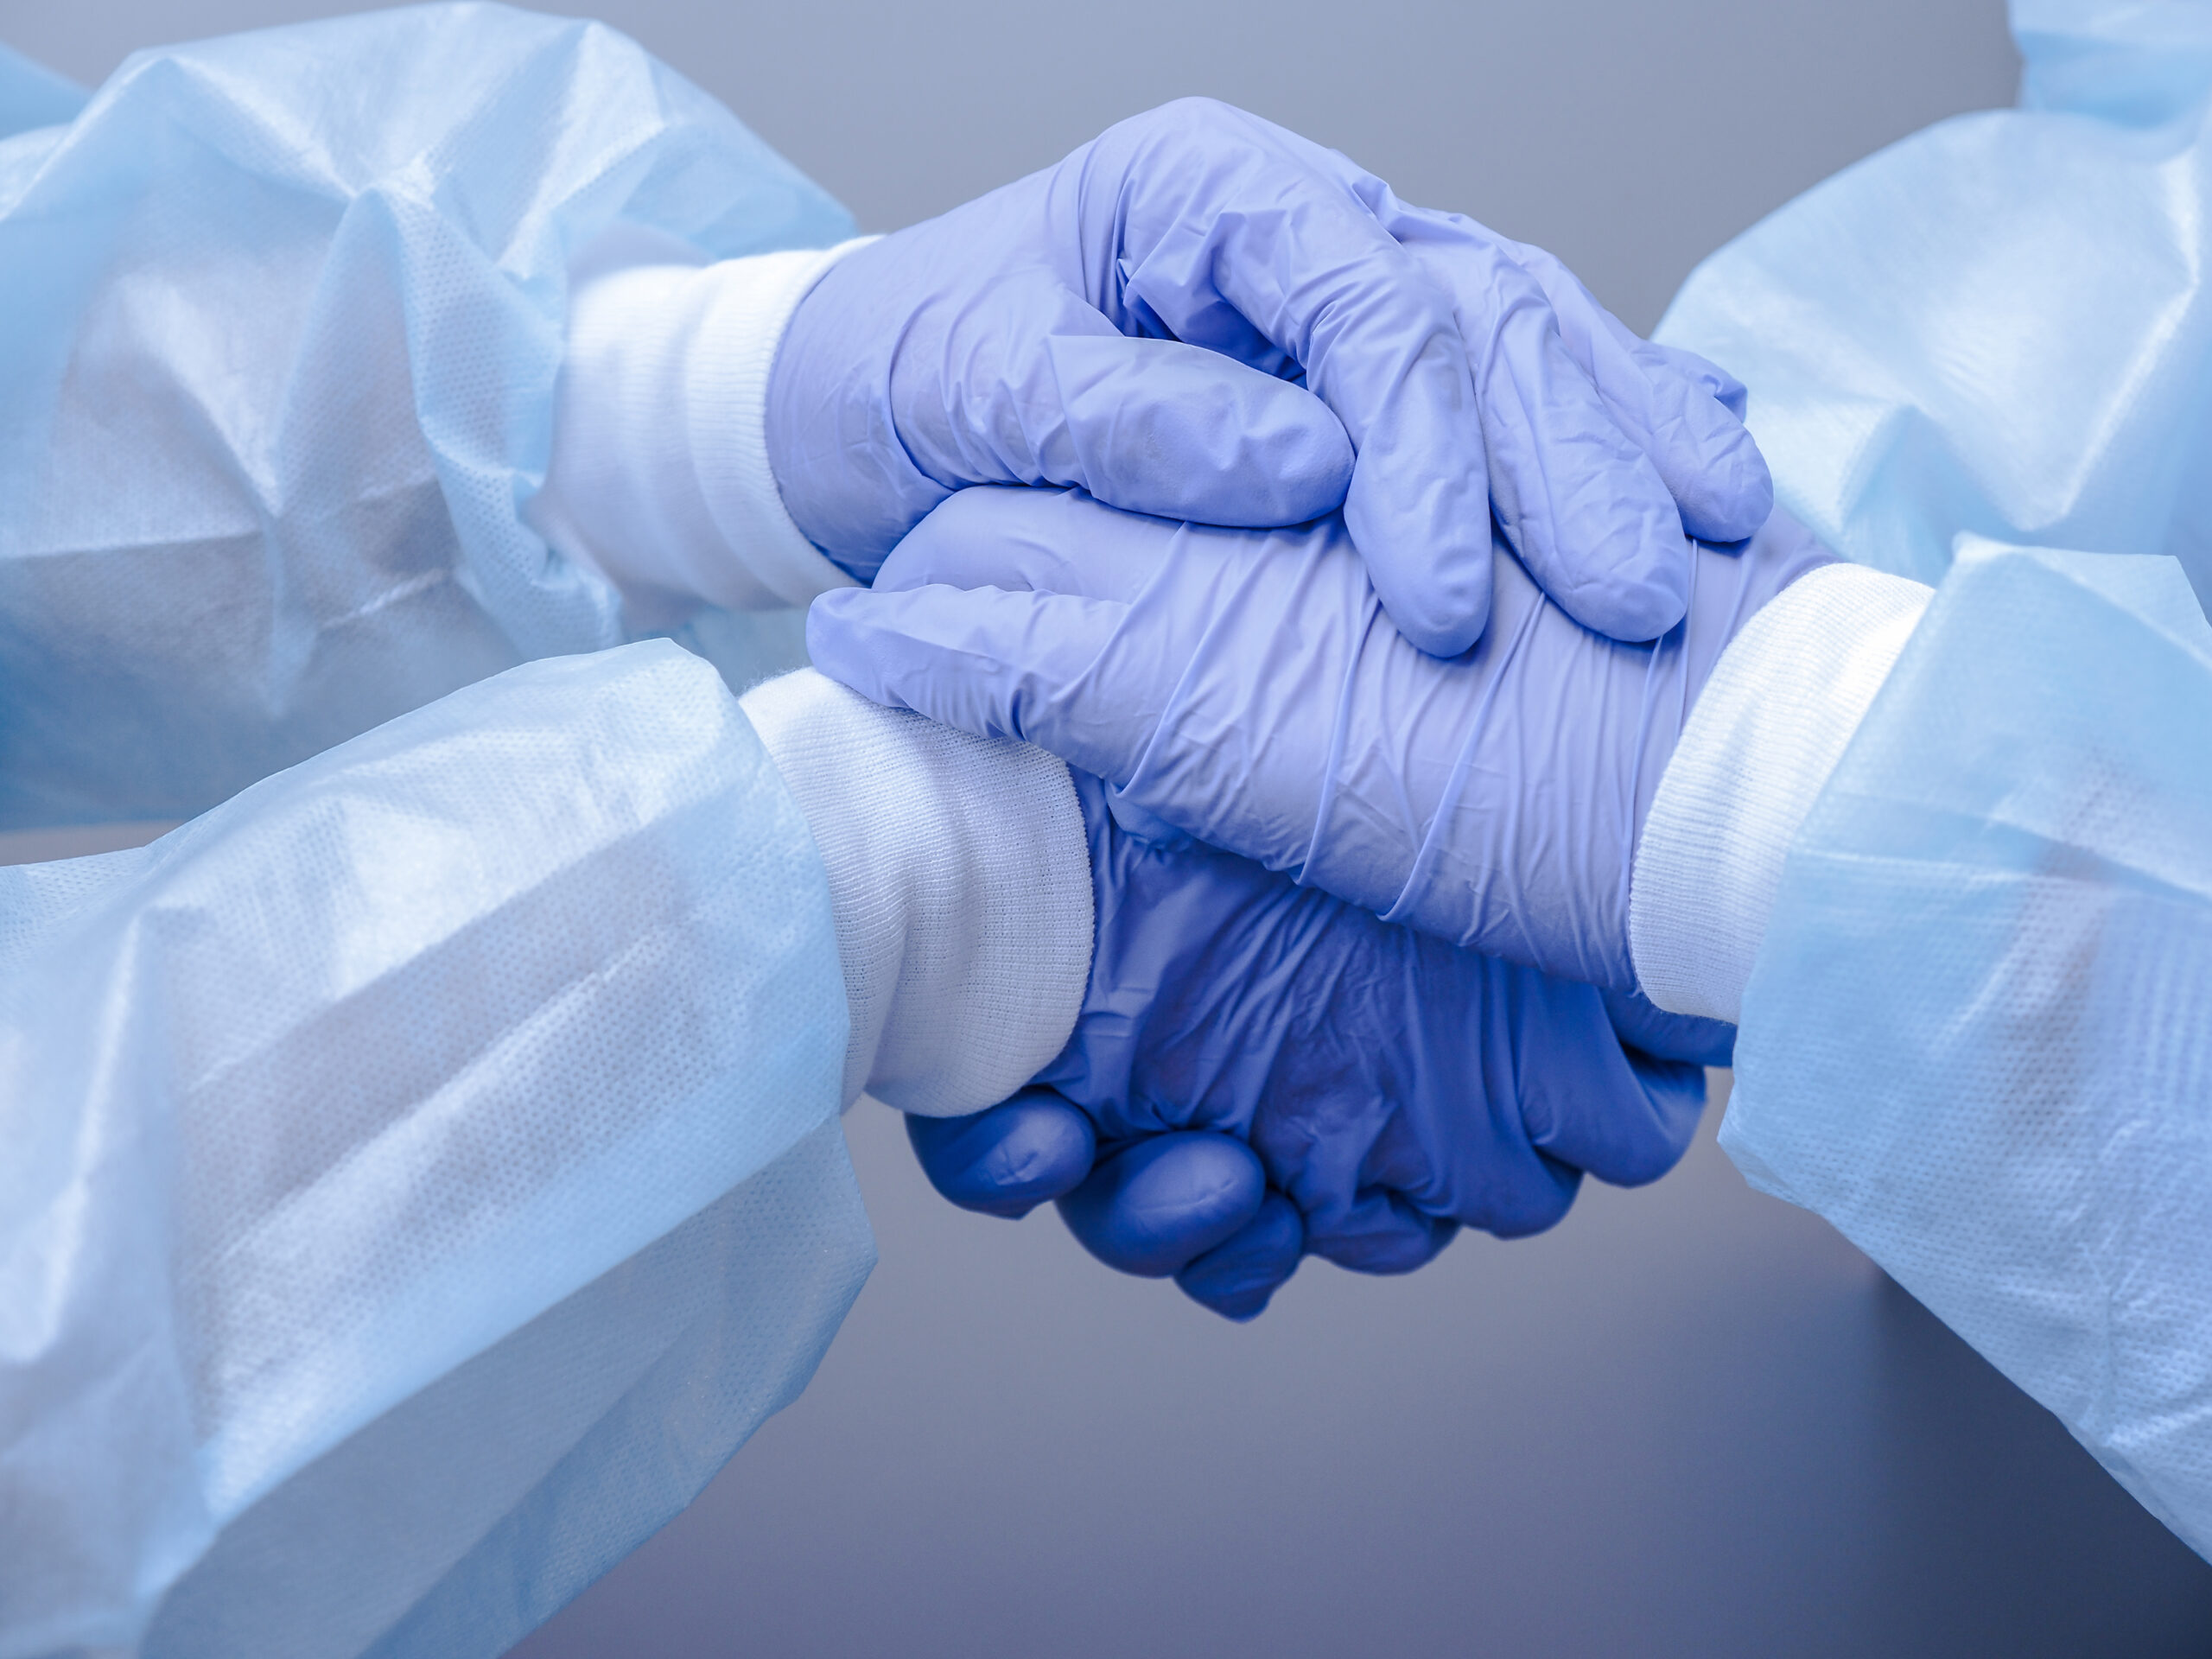 Handshake of two doctors' hands in medical gloves